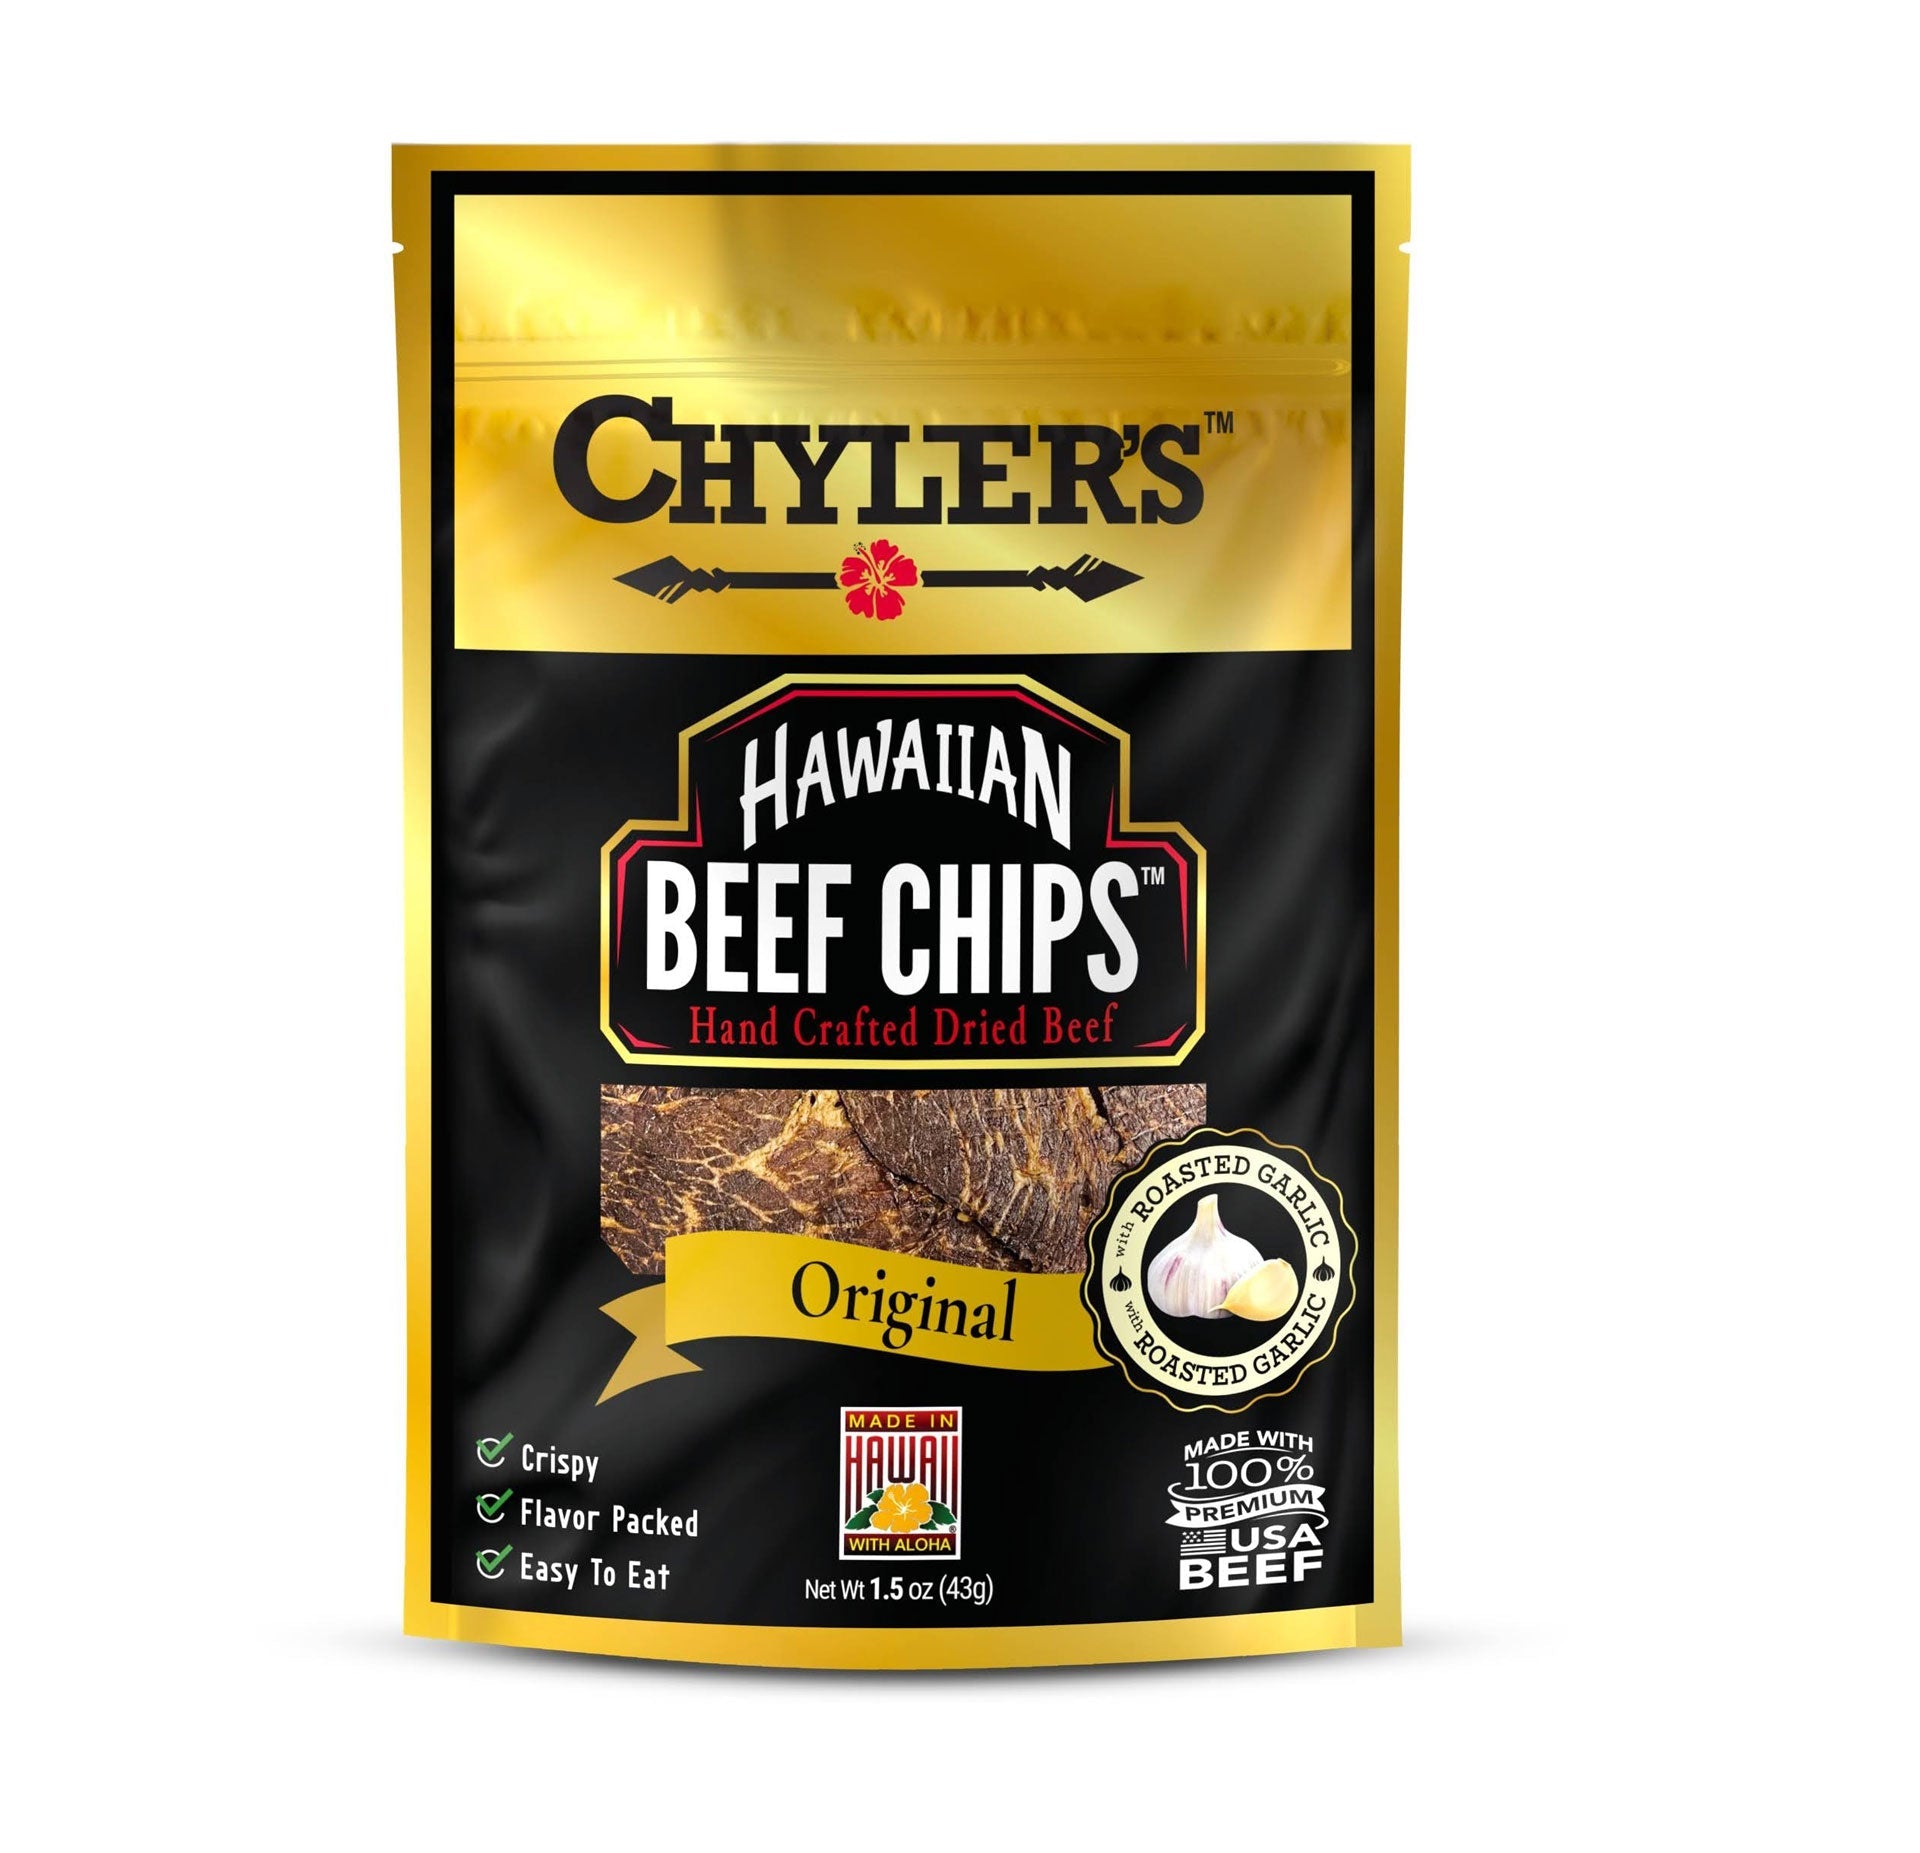 Hawaiian Beef Chips™ Original with Roasted Garlic - Chylers